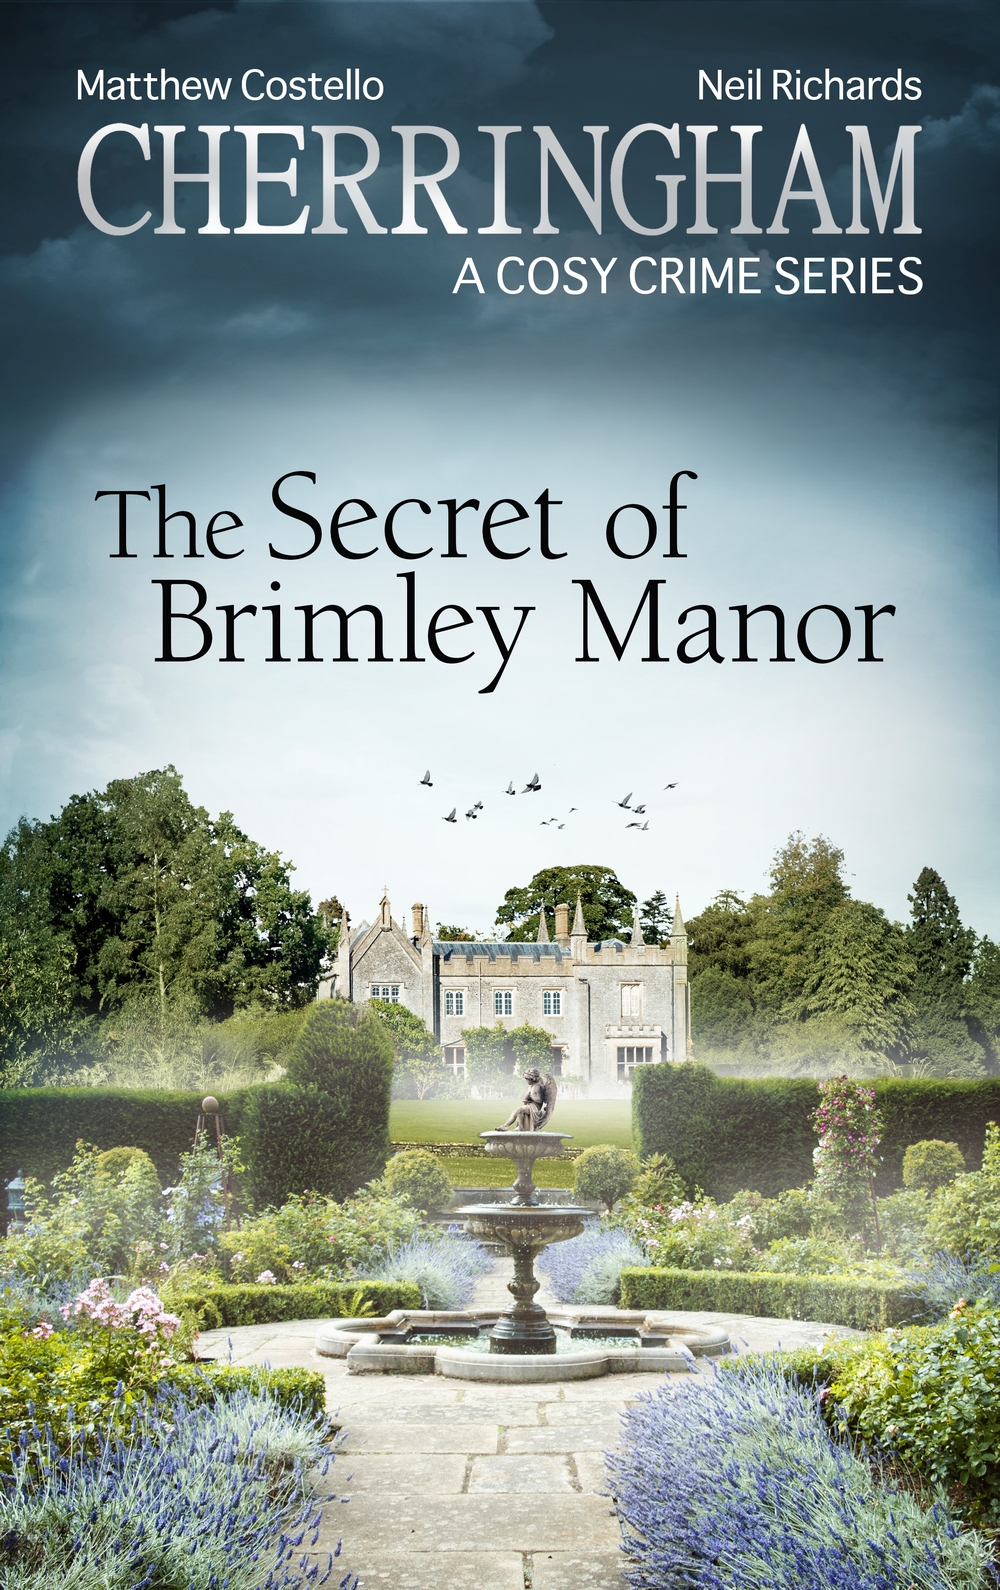 Cherringham--The Secret of Brimley Manor